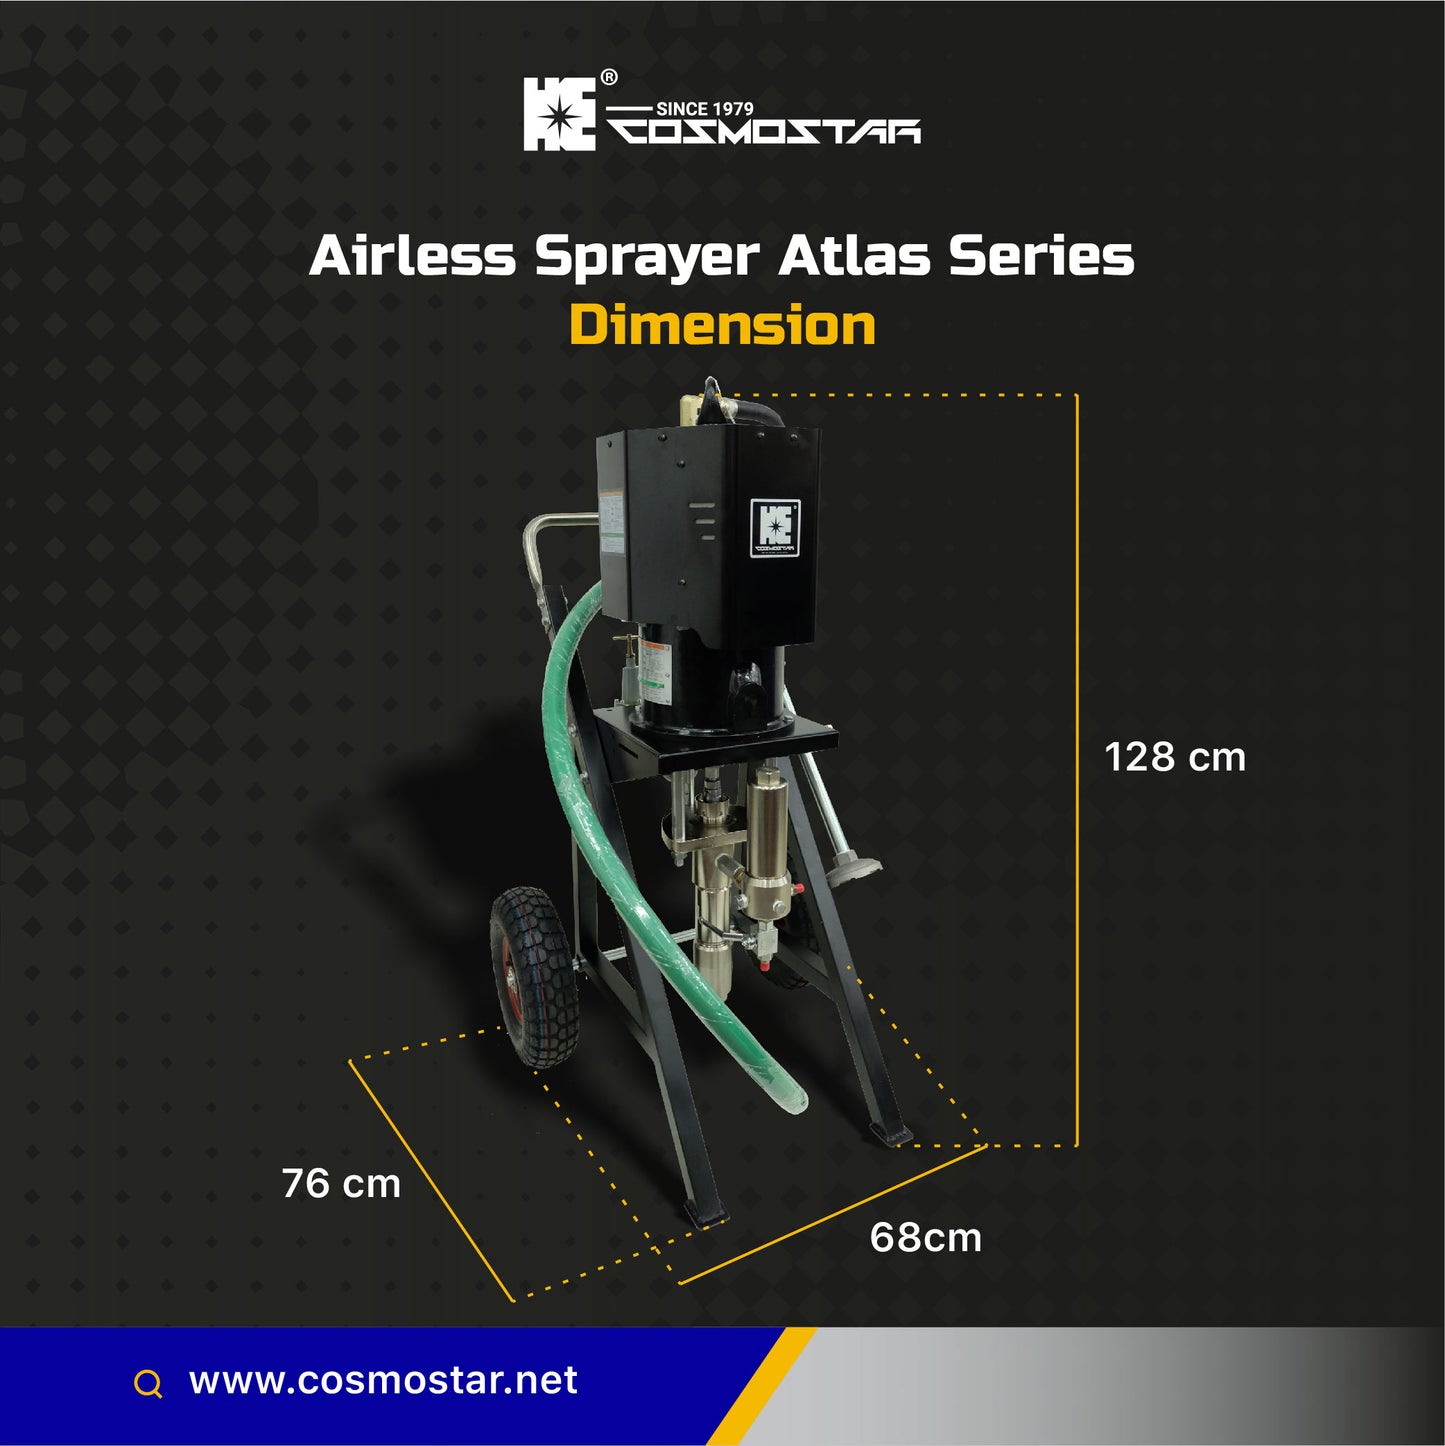 COSMOSTAR Atlas 10" AX0115 65:1 Pneumatic Airless Sprayer